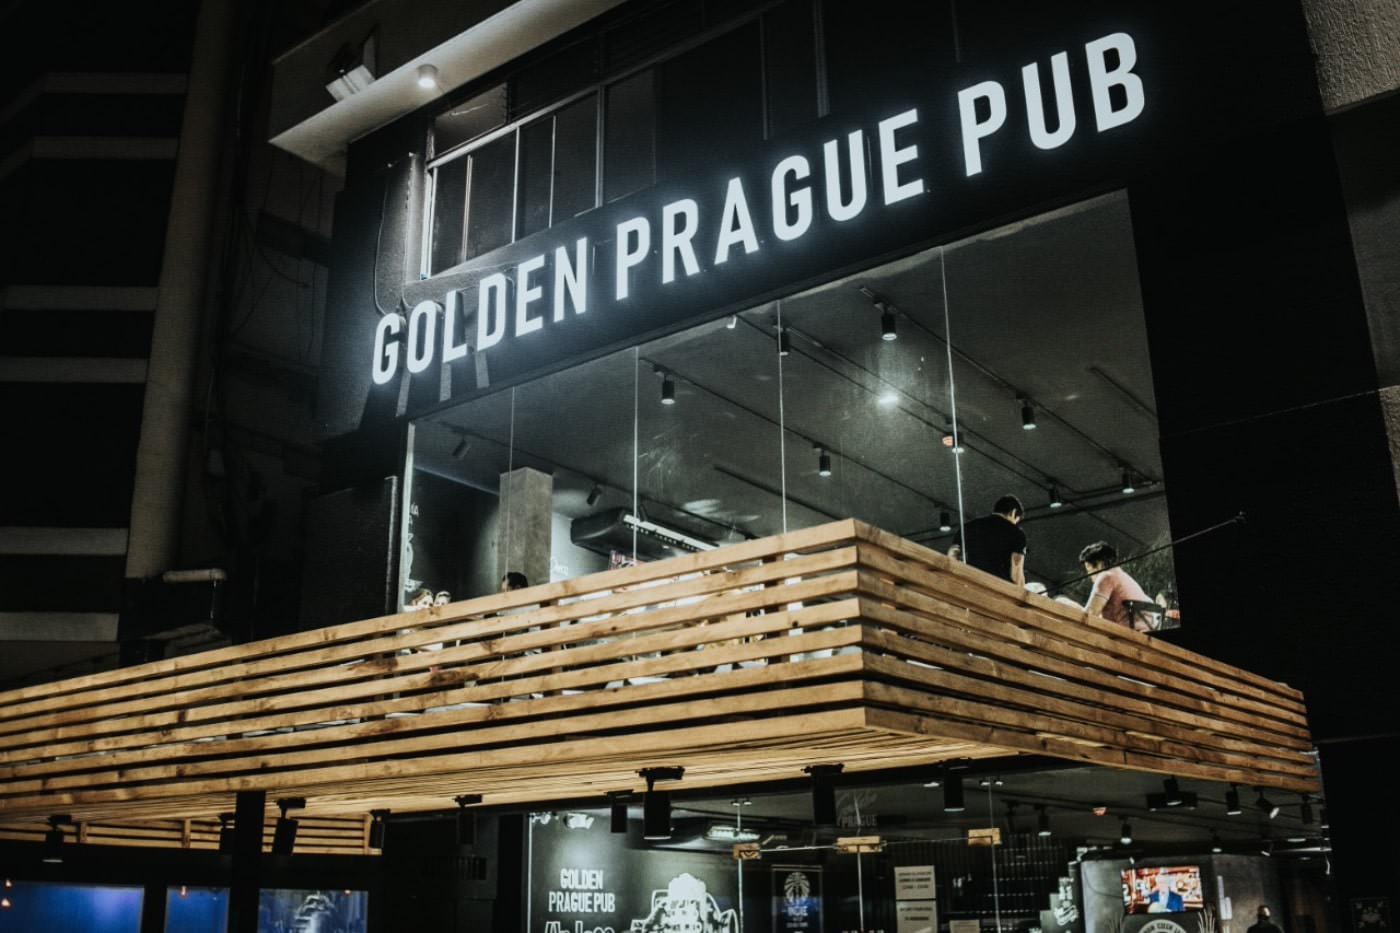 Golden Prague Pub Urdesa